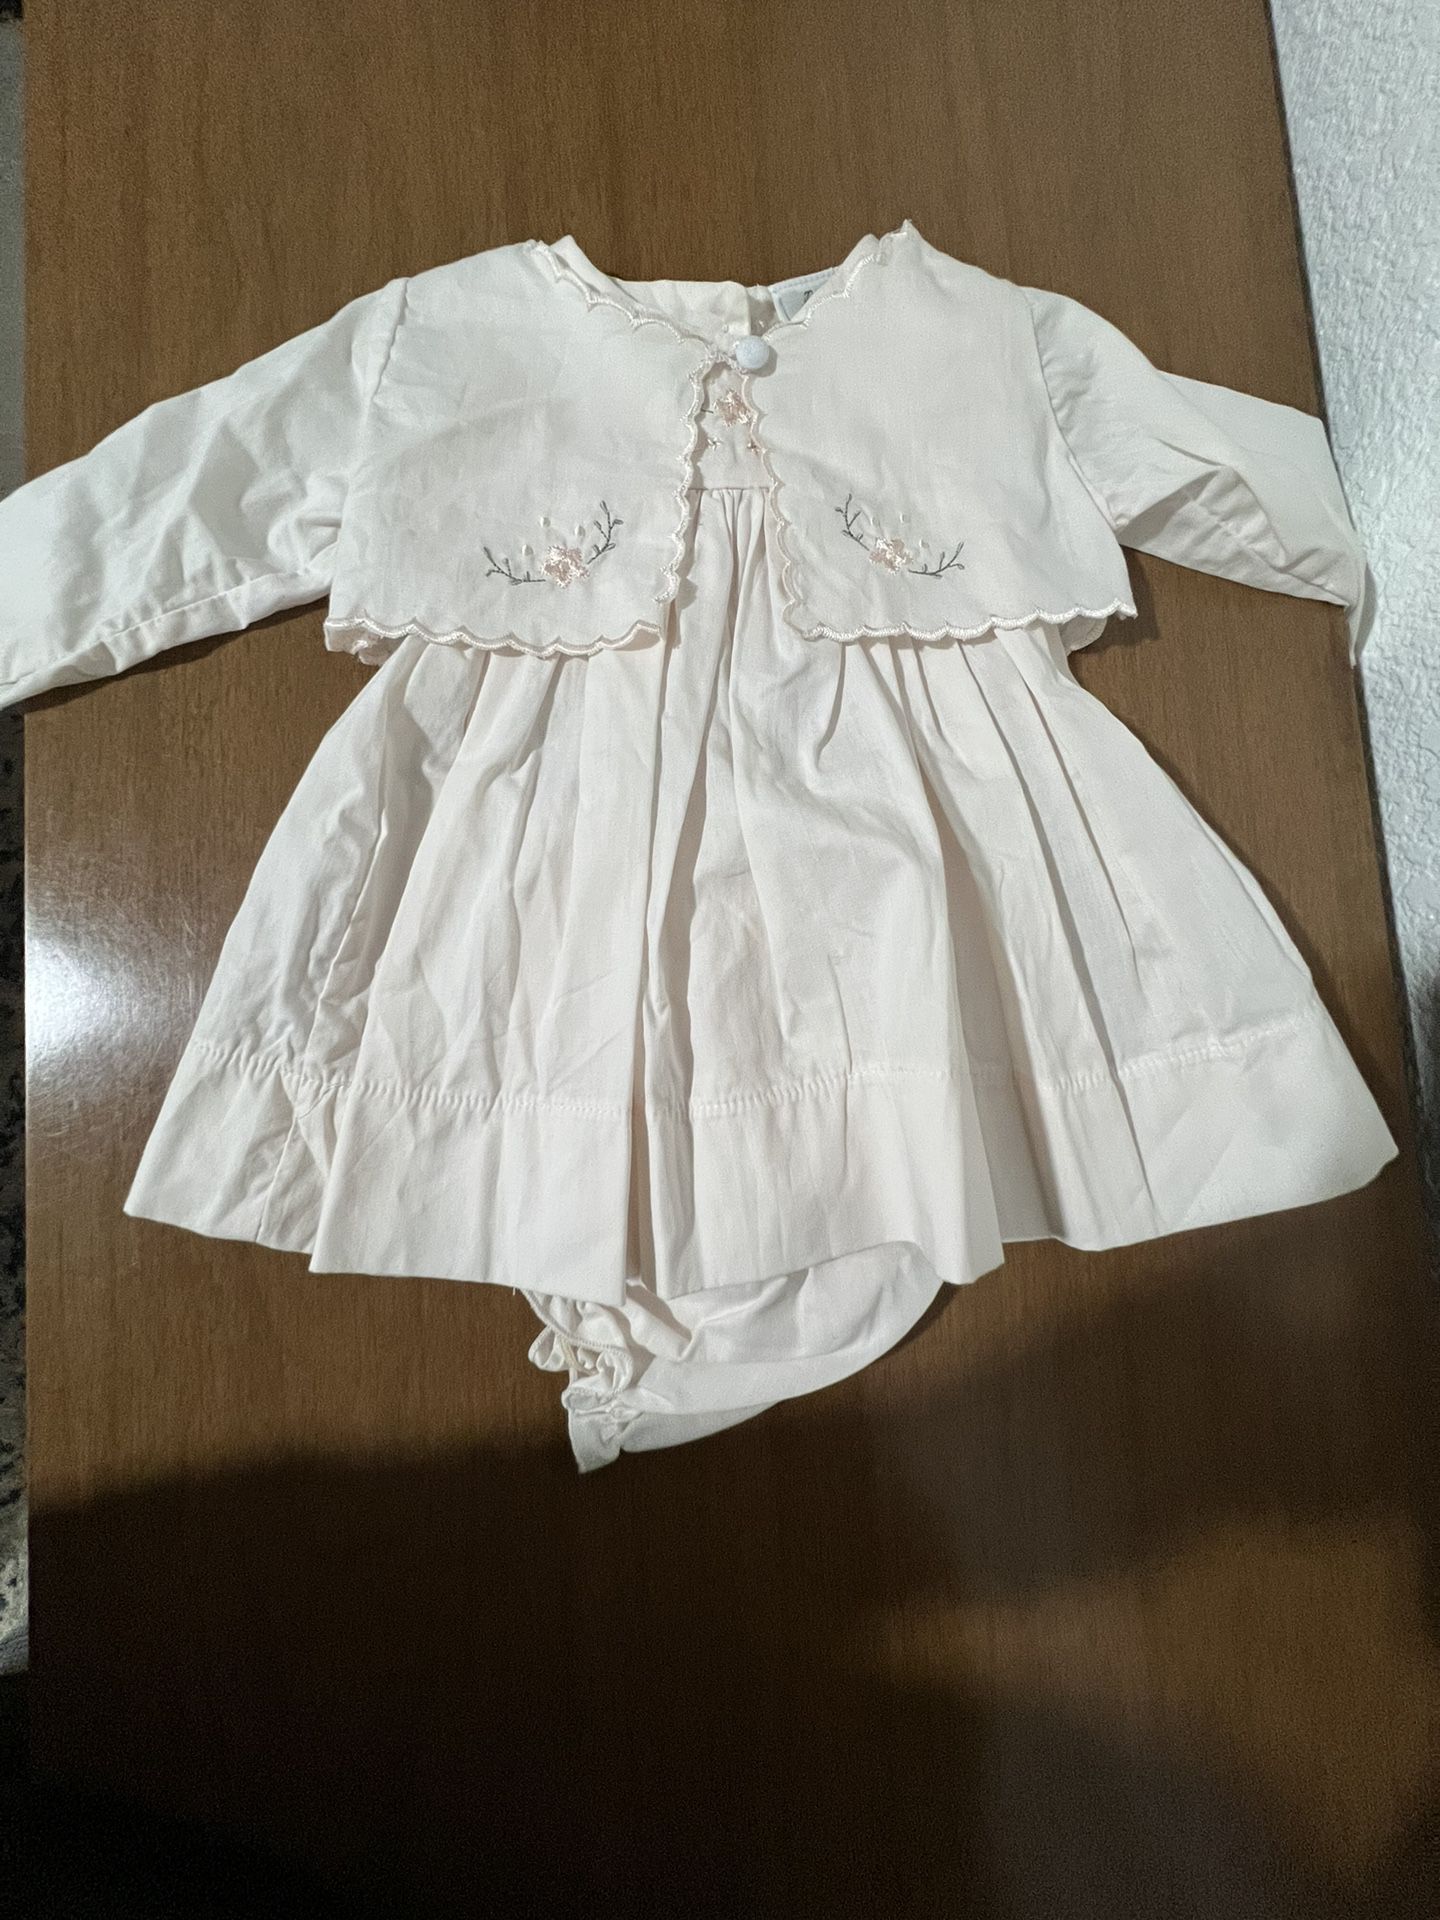 Baby dress  Allie Wade size 3-6 months  100% Cotton